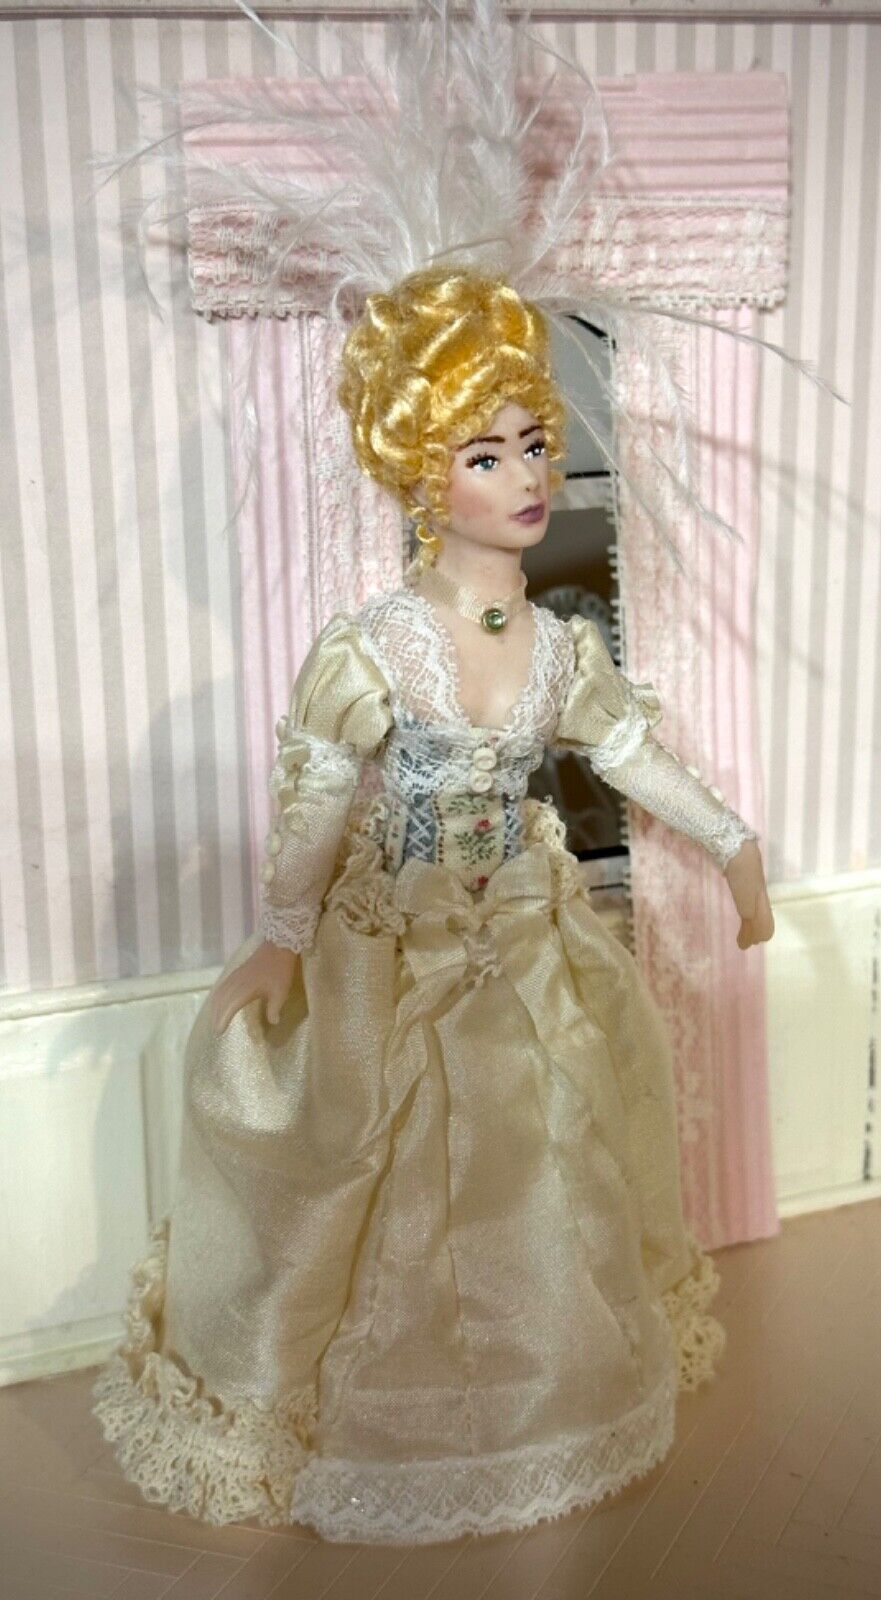 Dollhouse Miniature Artisan made 1:12 Victorian Doll